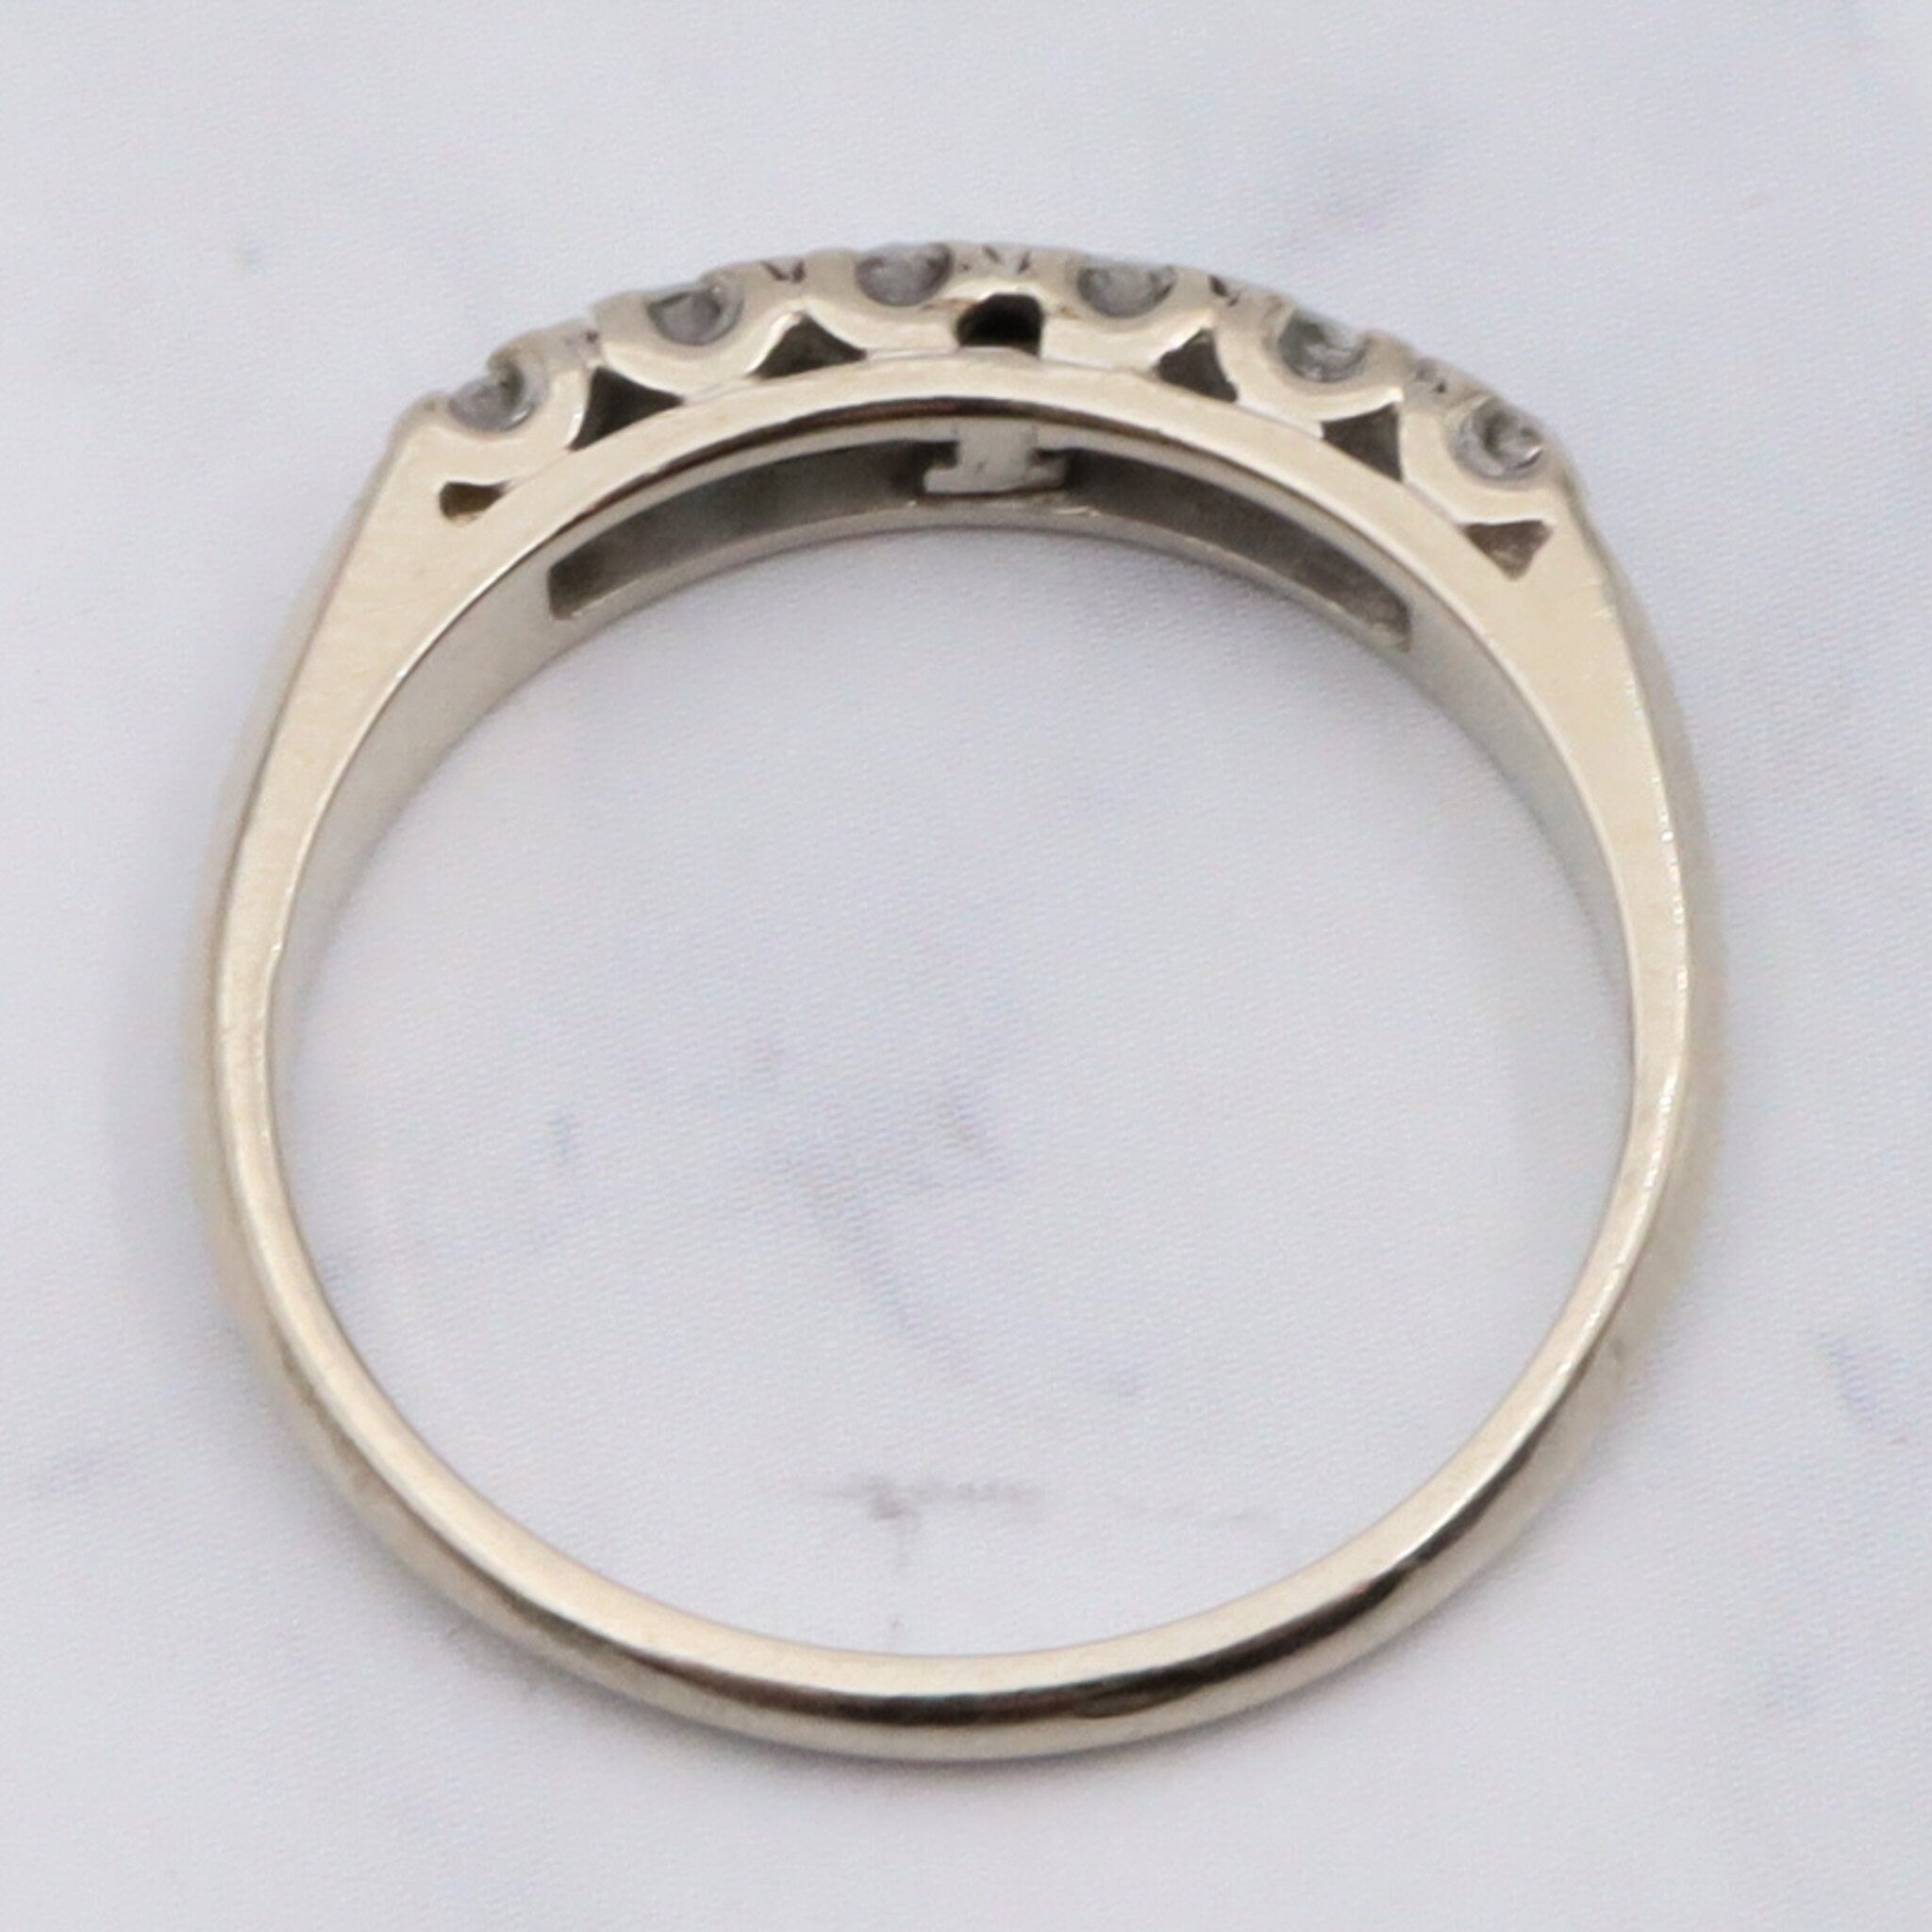 Antique 14K White Gold Diamond Ring - Size 5